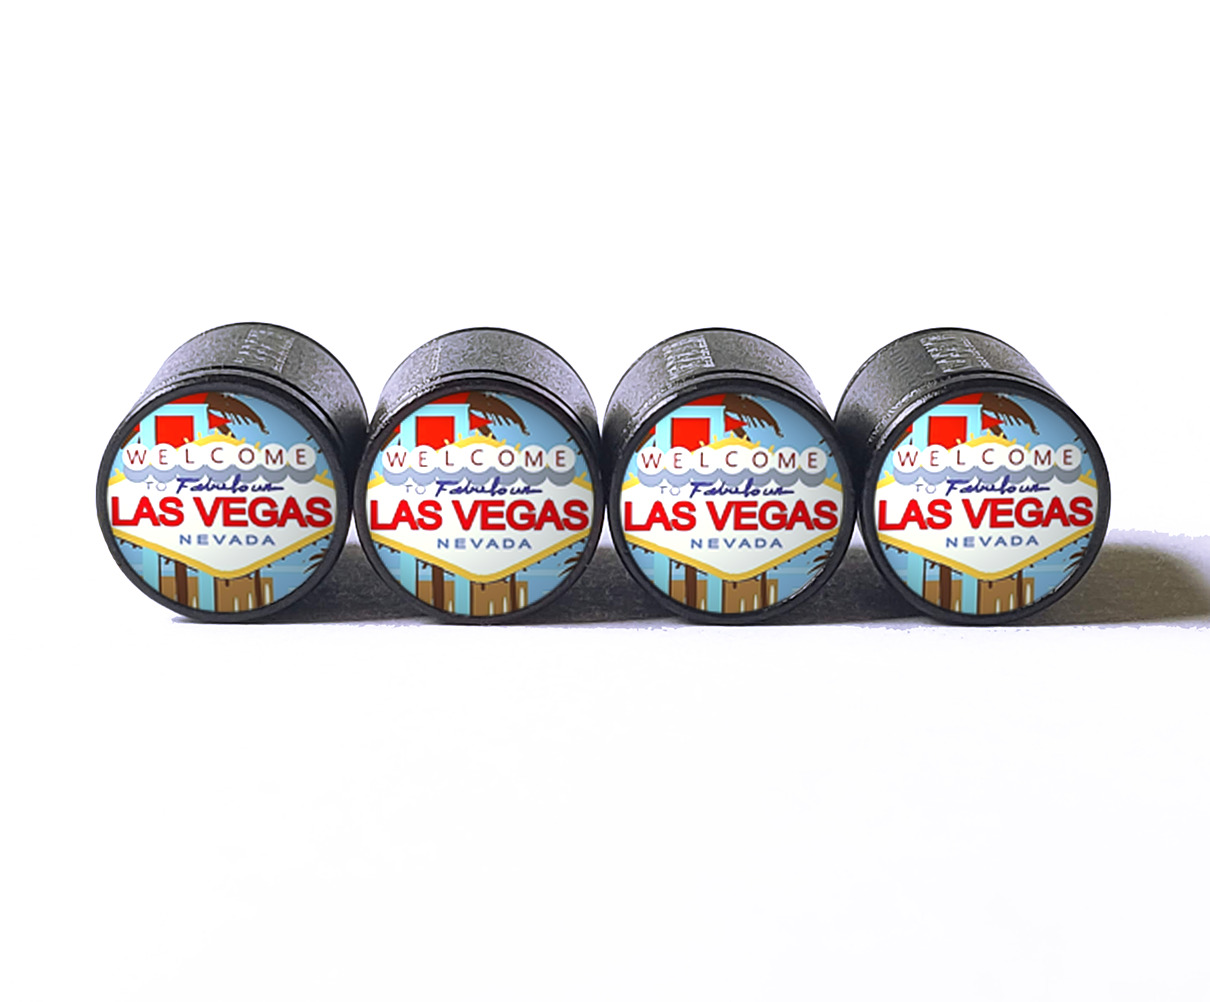 Welcome to Las Vegas Tire Valve Stem Caps - Black Aluminum - Set of Four